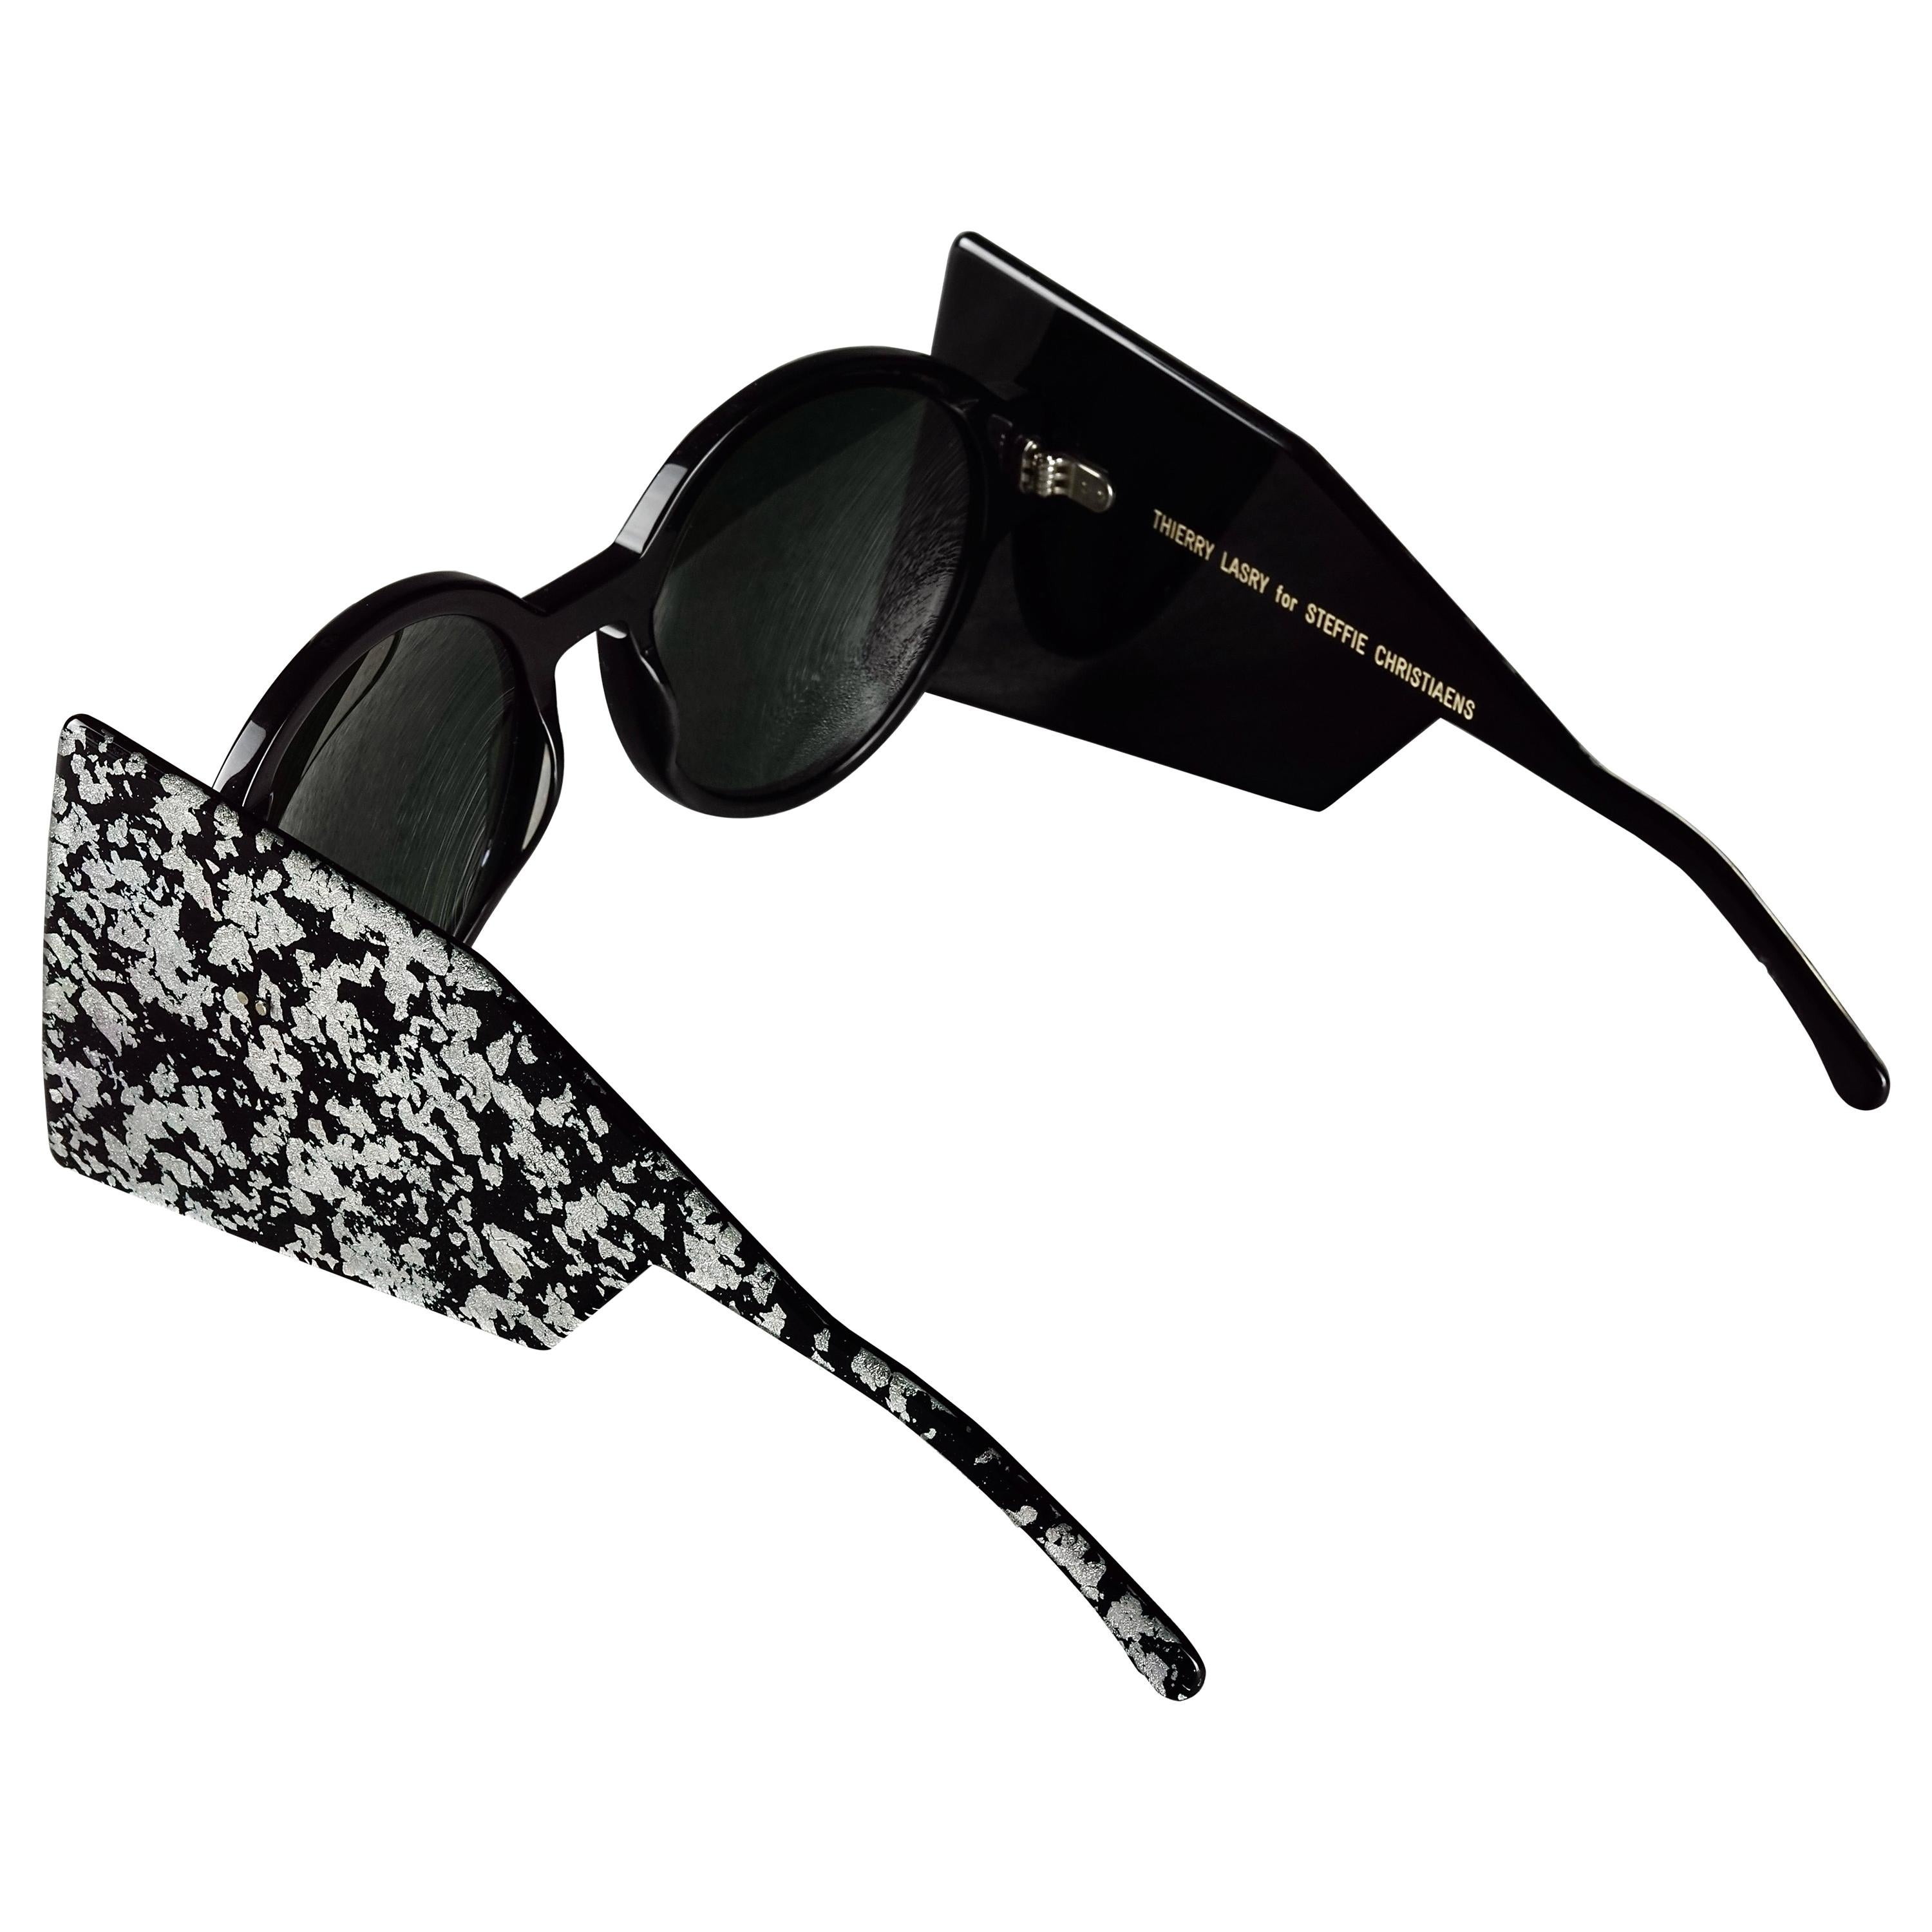 THIERRY LASRY for STEFFIE CHRISTIAENS "Gyrolite" Futuristic Sunglasses